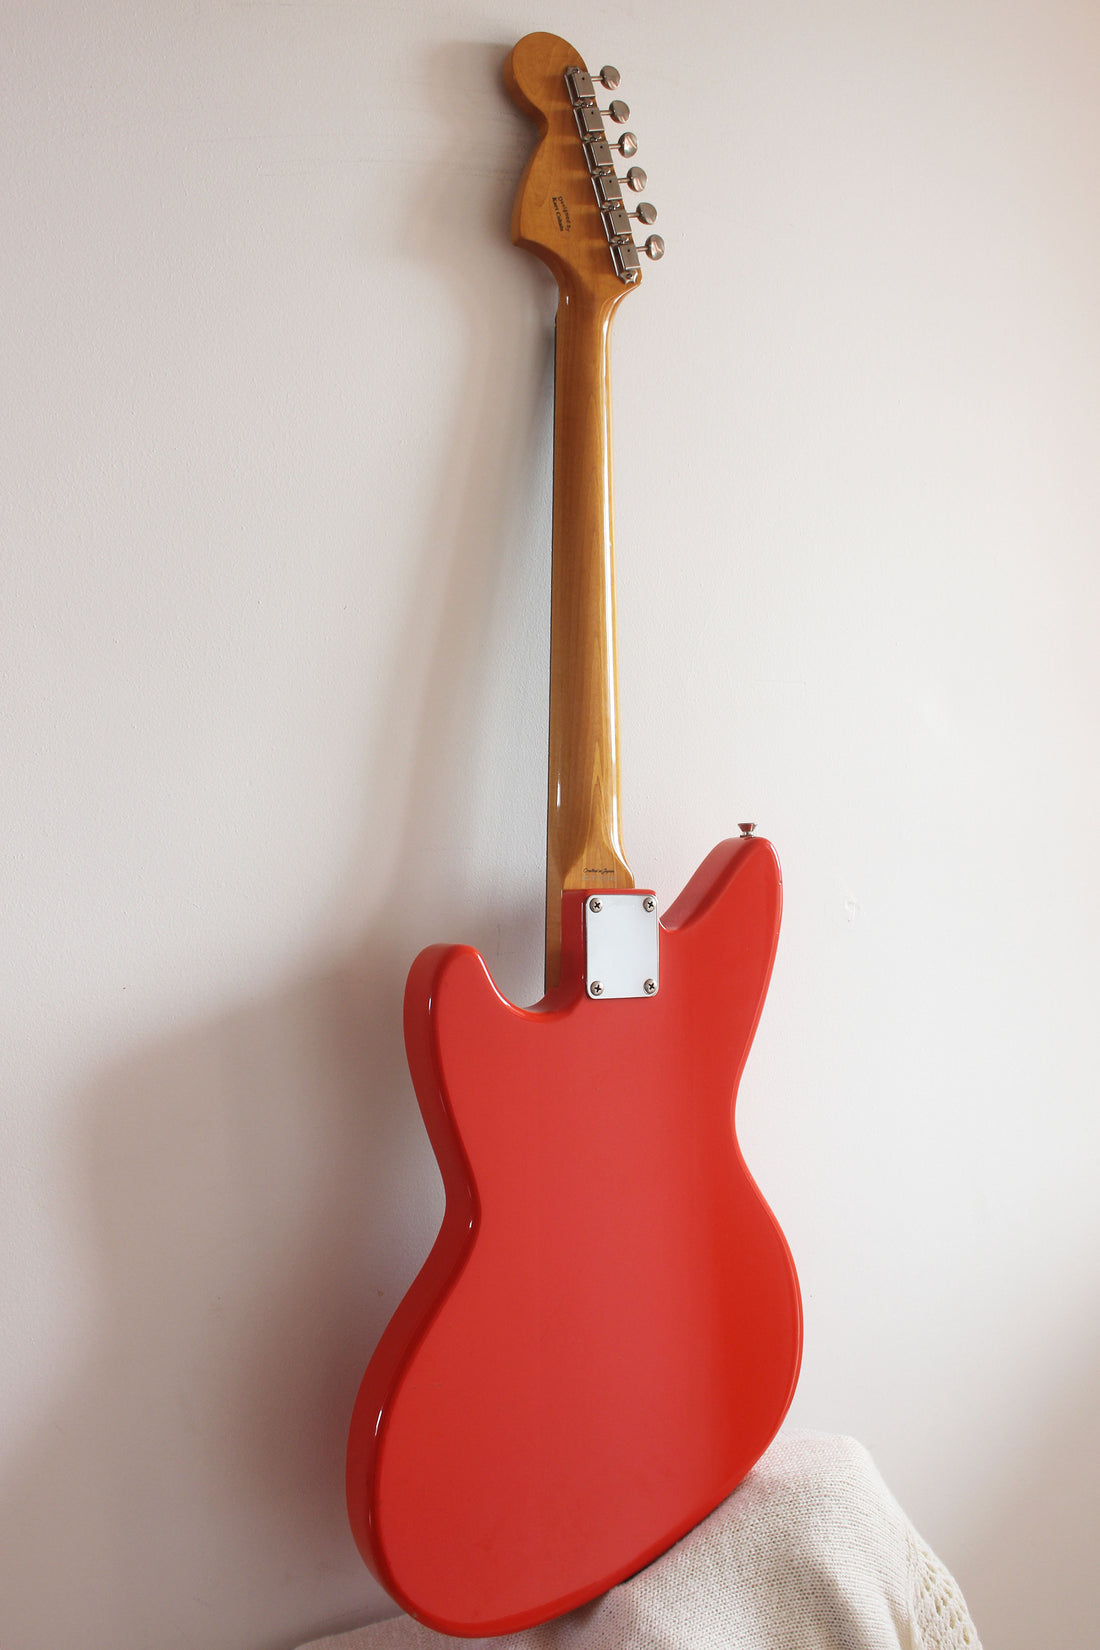 Used Fender Jag-Stang Fiesta Red